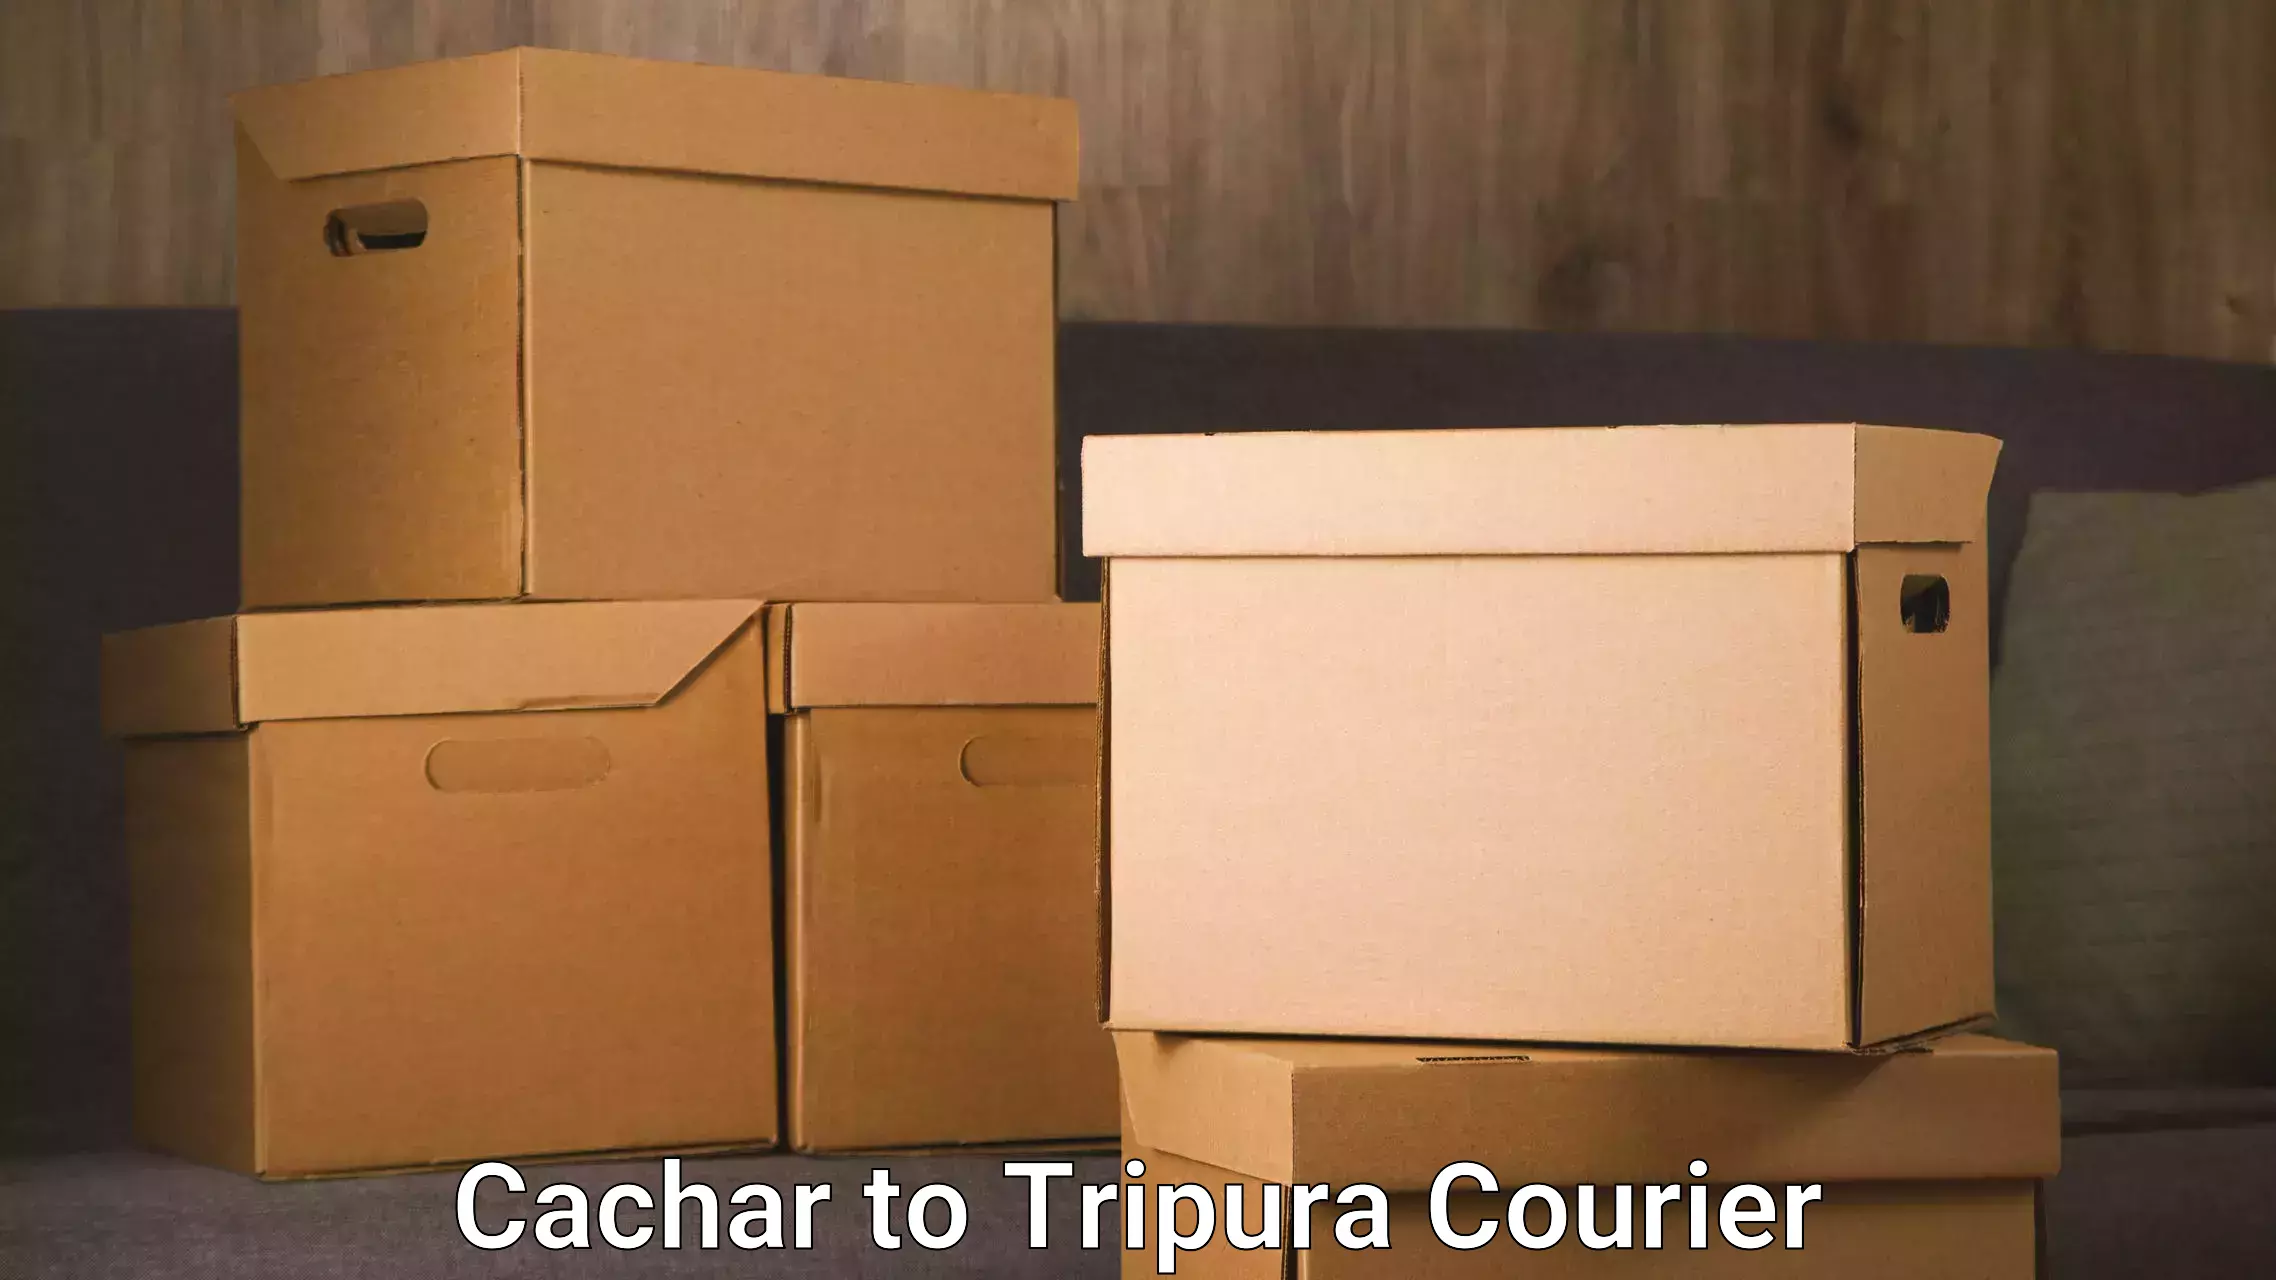 Express courier capabilities Cachar to Agartala